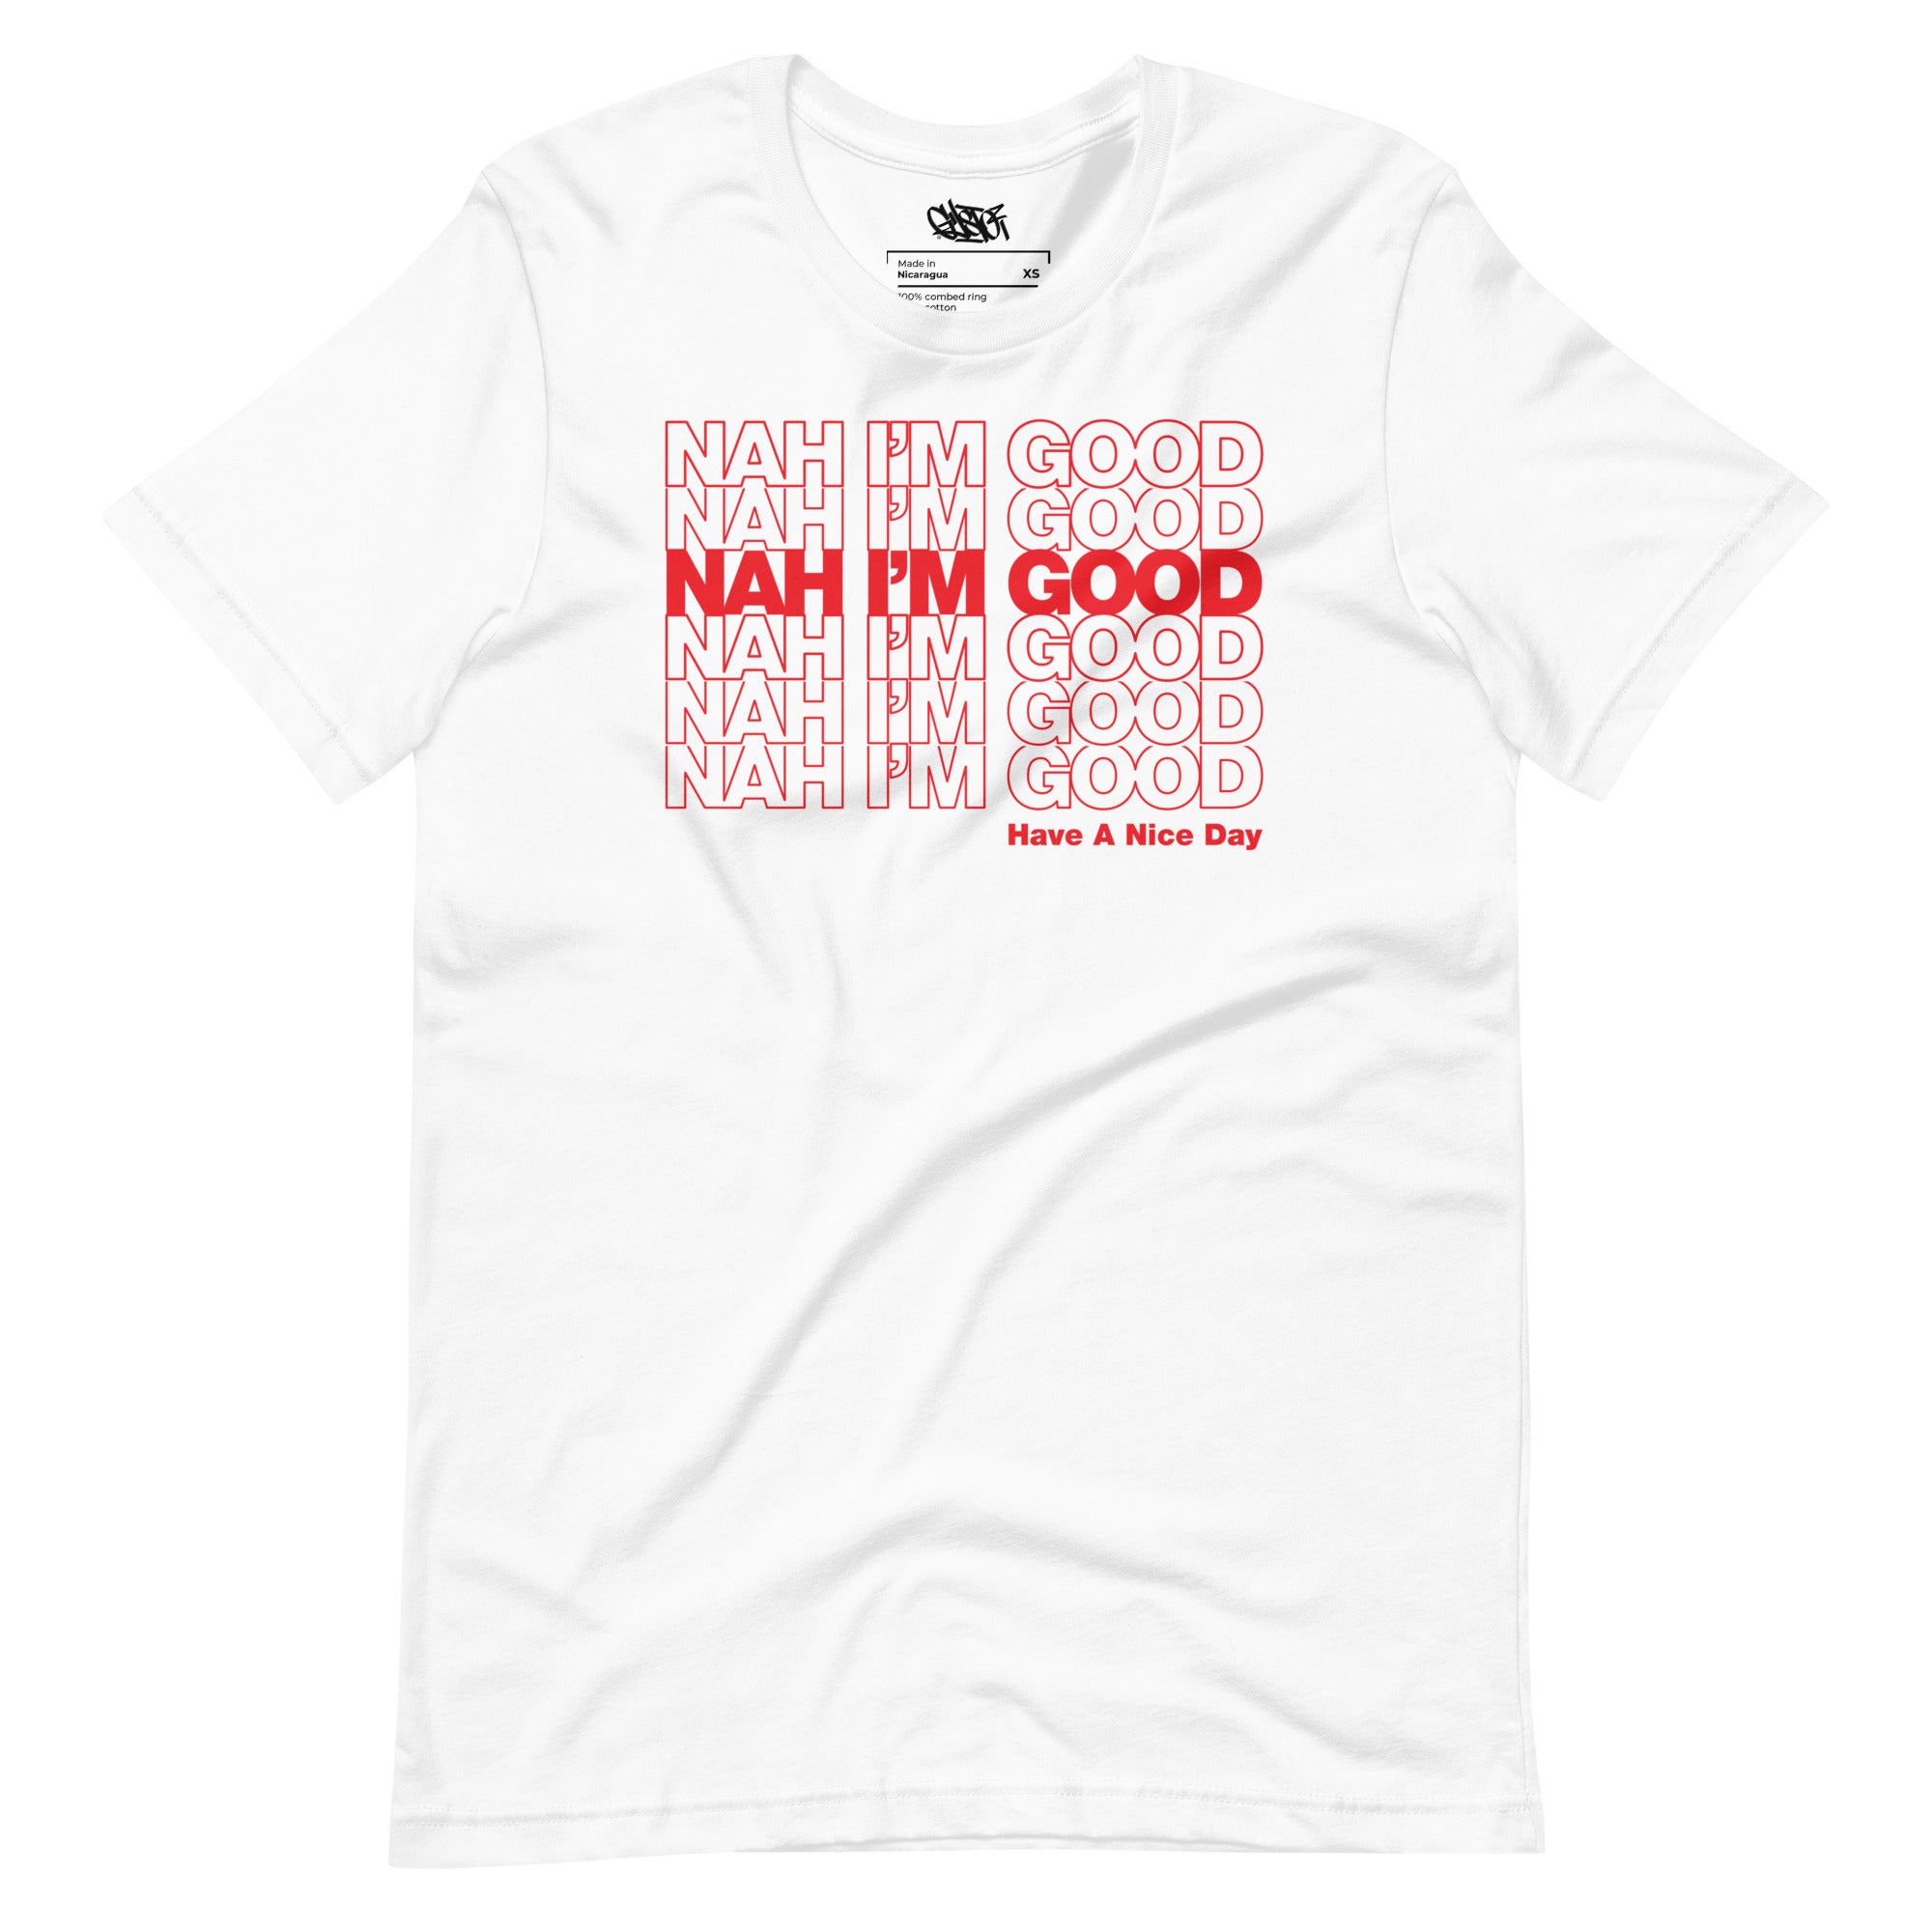 Nah I'm Good - Short-Sleeve Unisex T-Shirt - GustoNYC